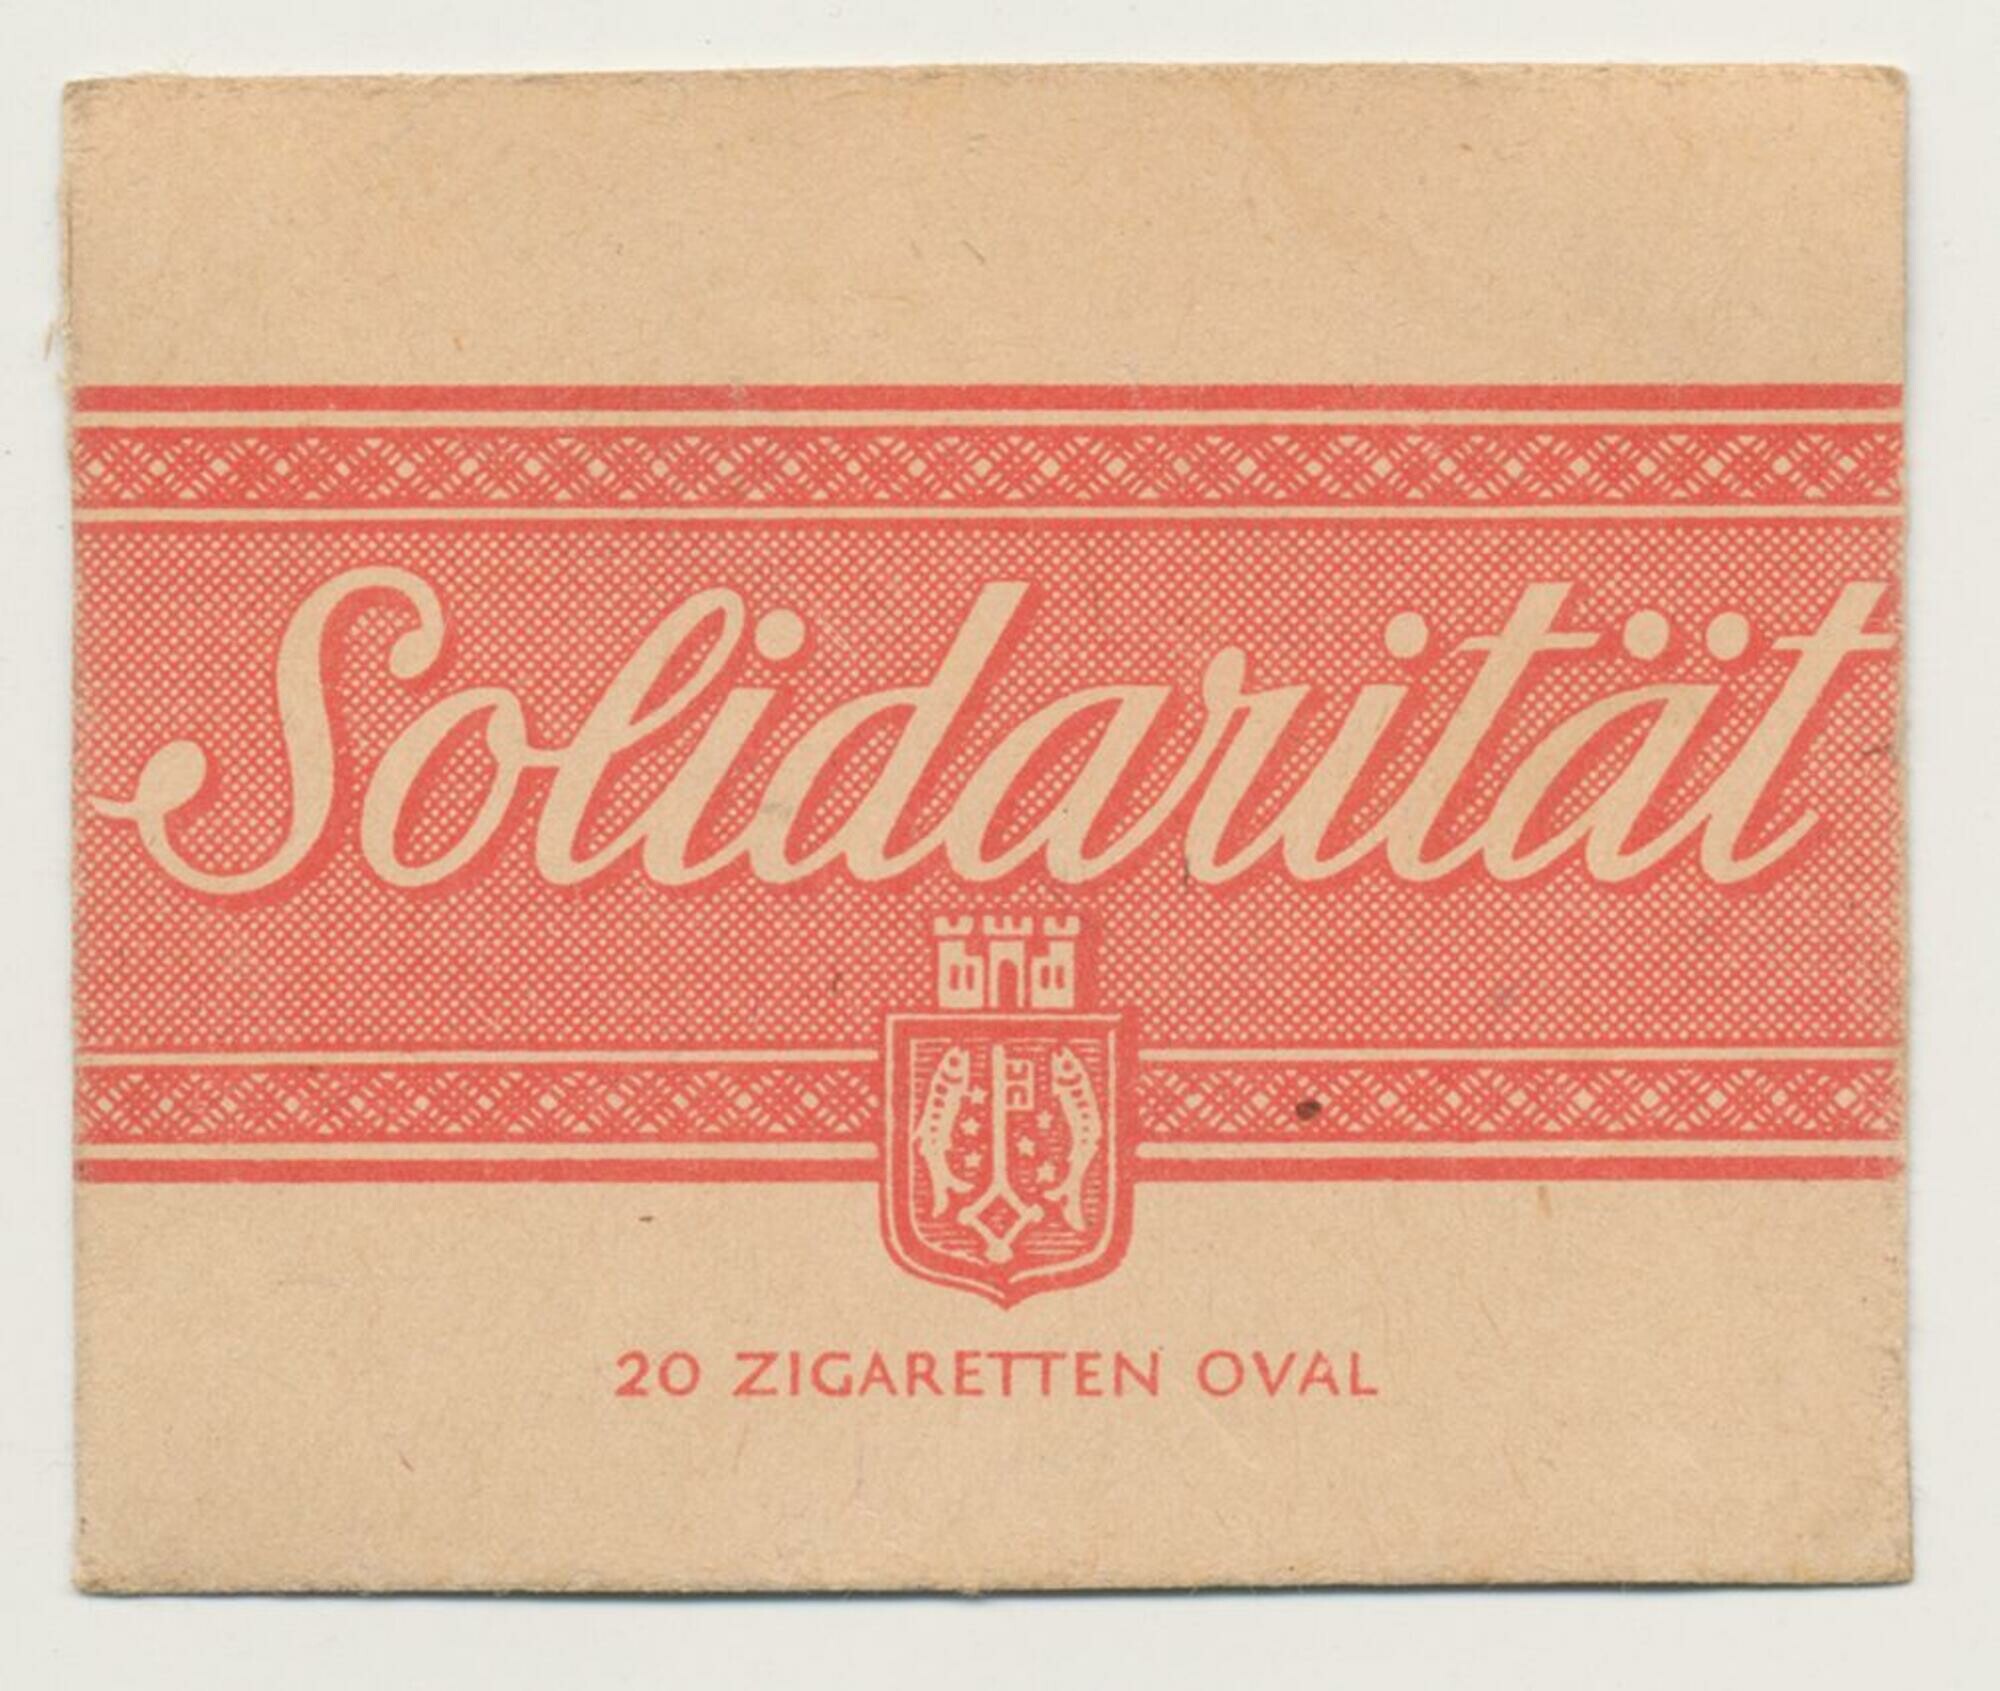 Packungszuschnitt einer Zigarettenschachtel der Marke "Solidarität" (Stadtmuseum Dresden CC BY-NC-ND)